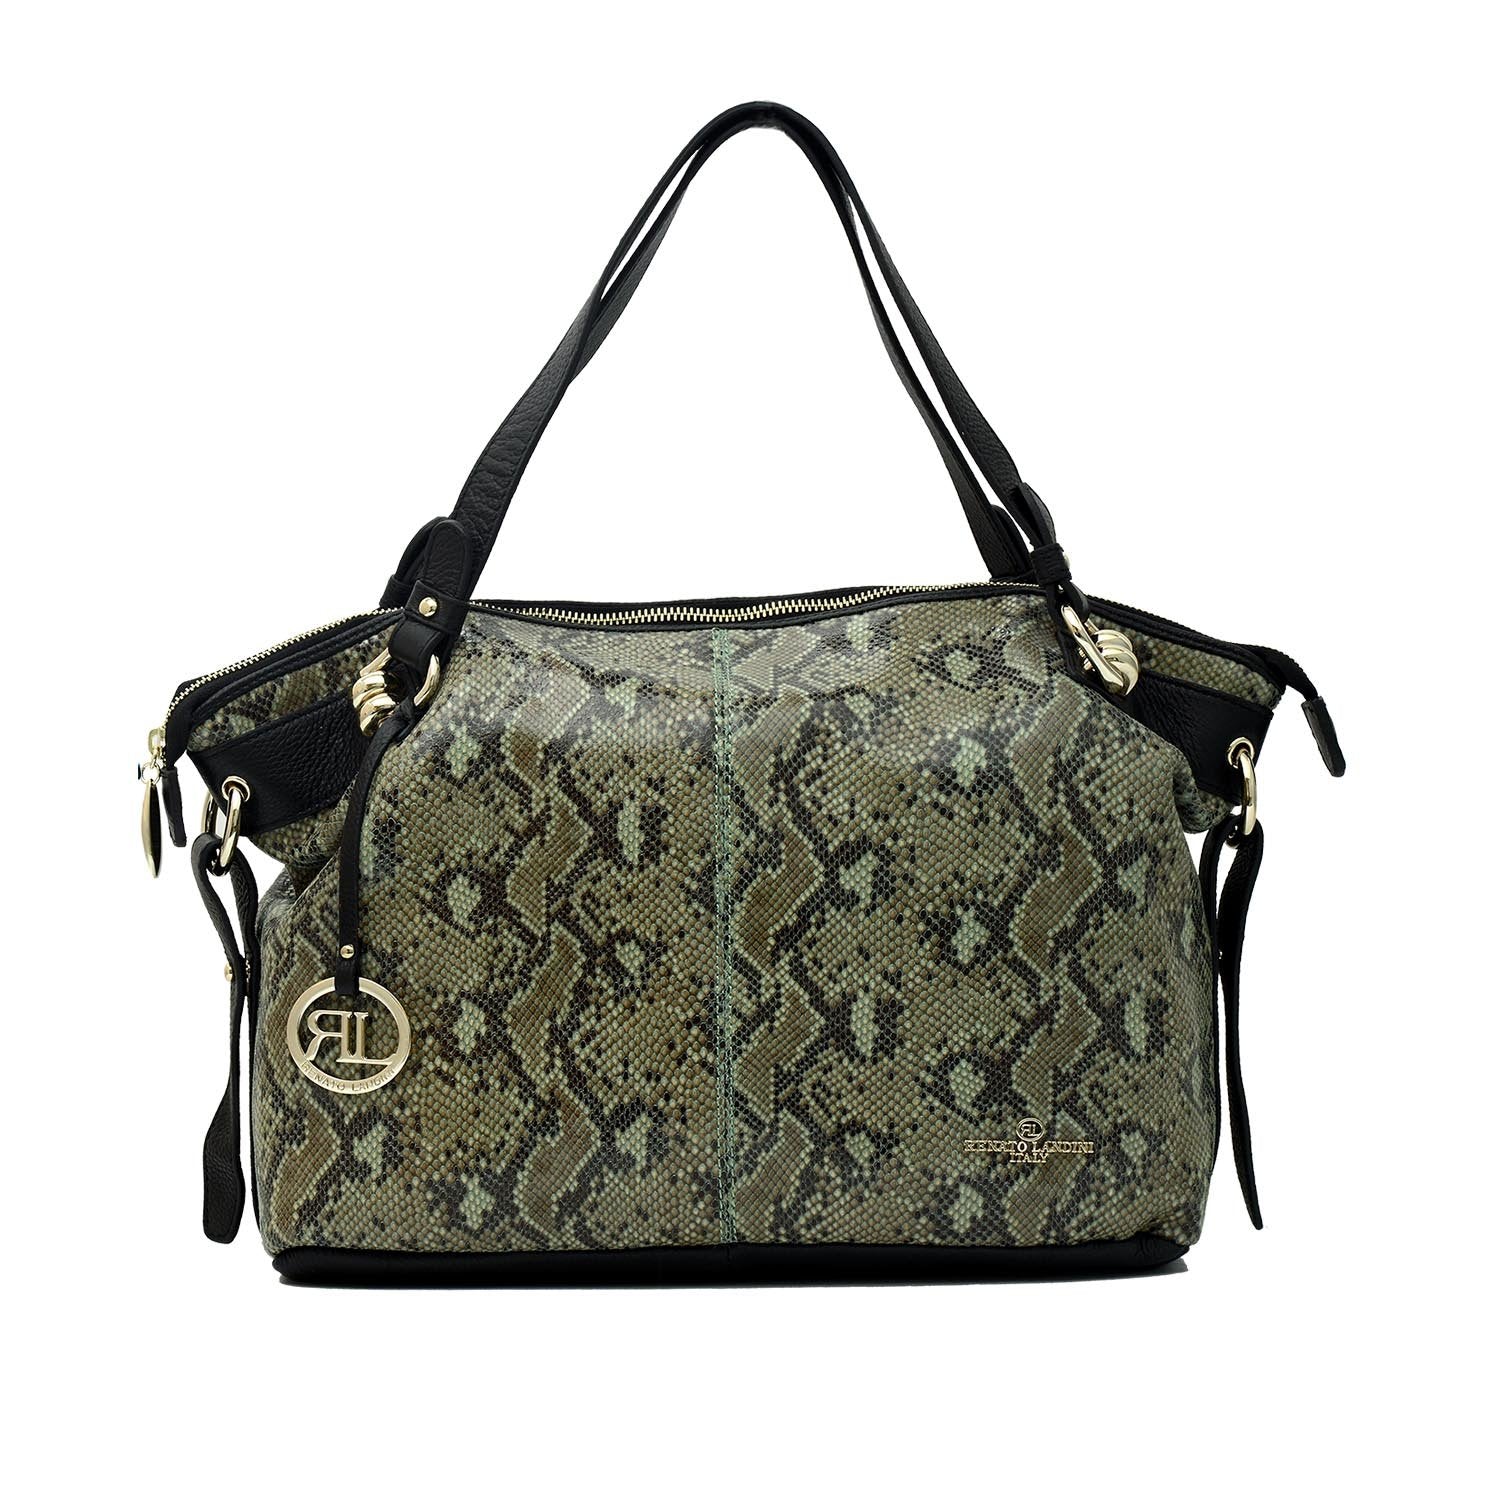 RENATO LANDINI Lady's Bag Green/ Python